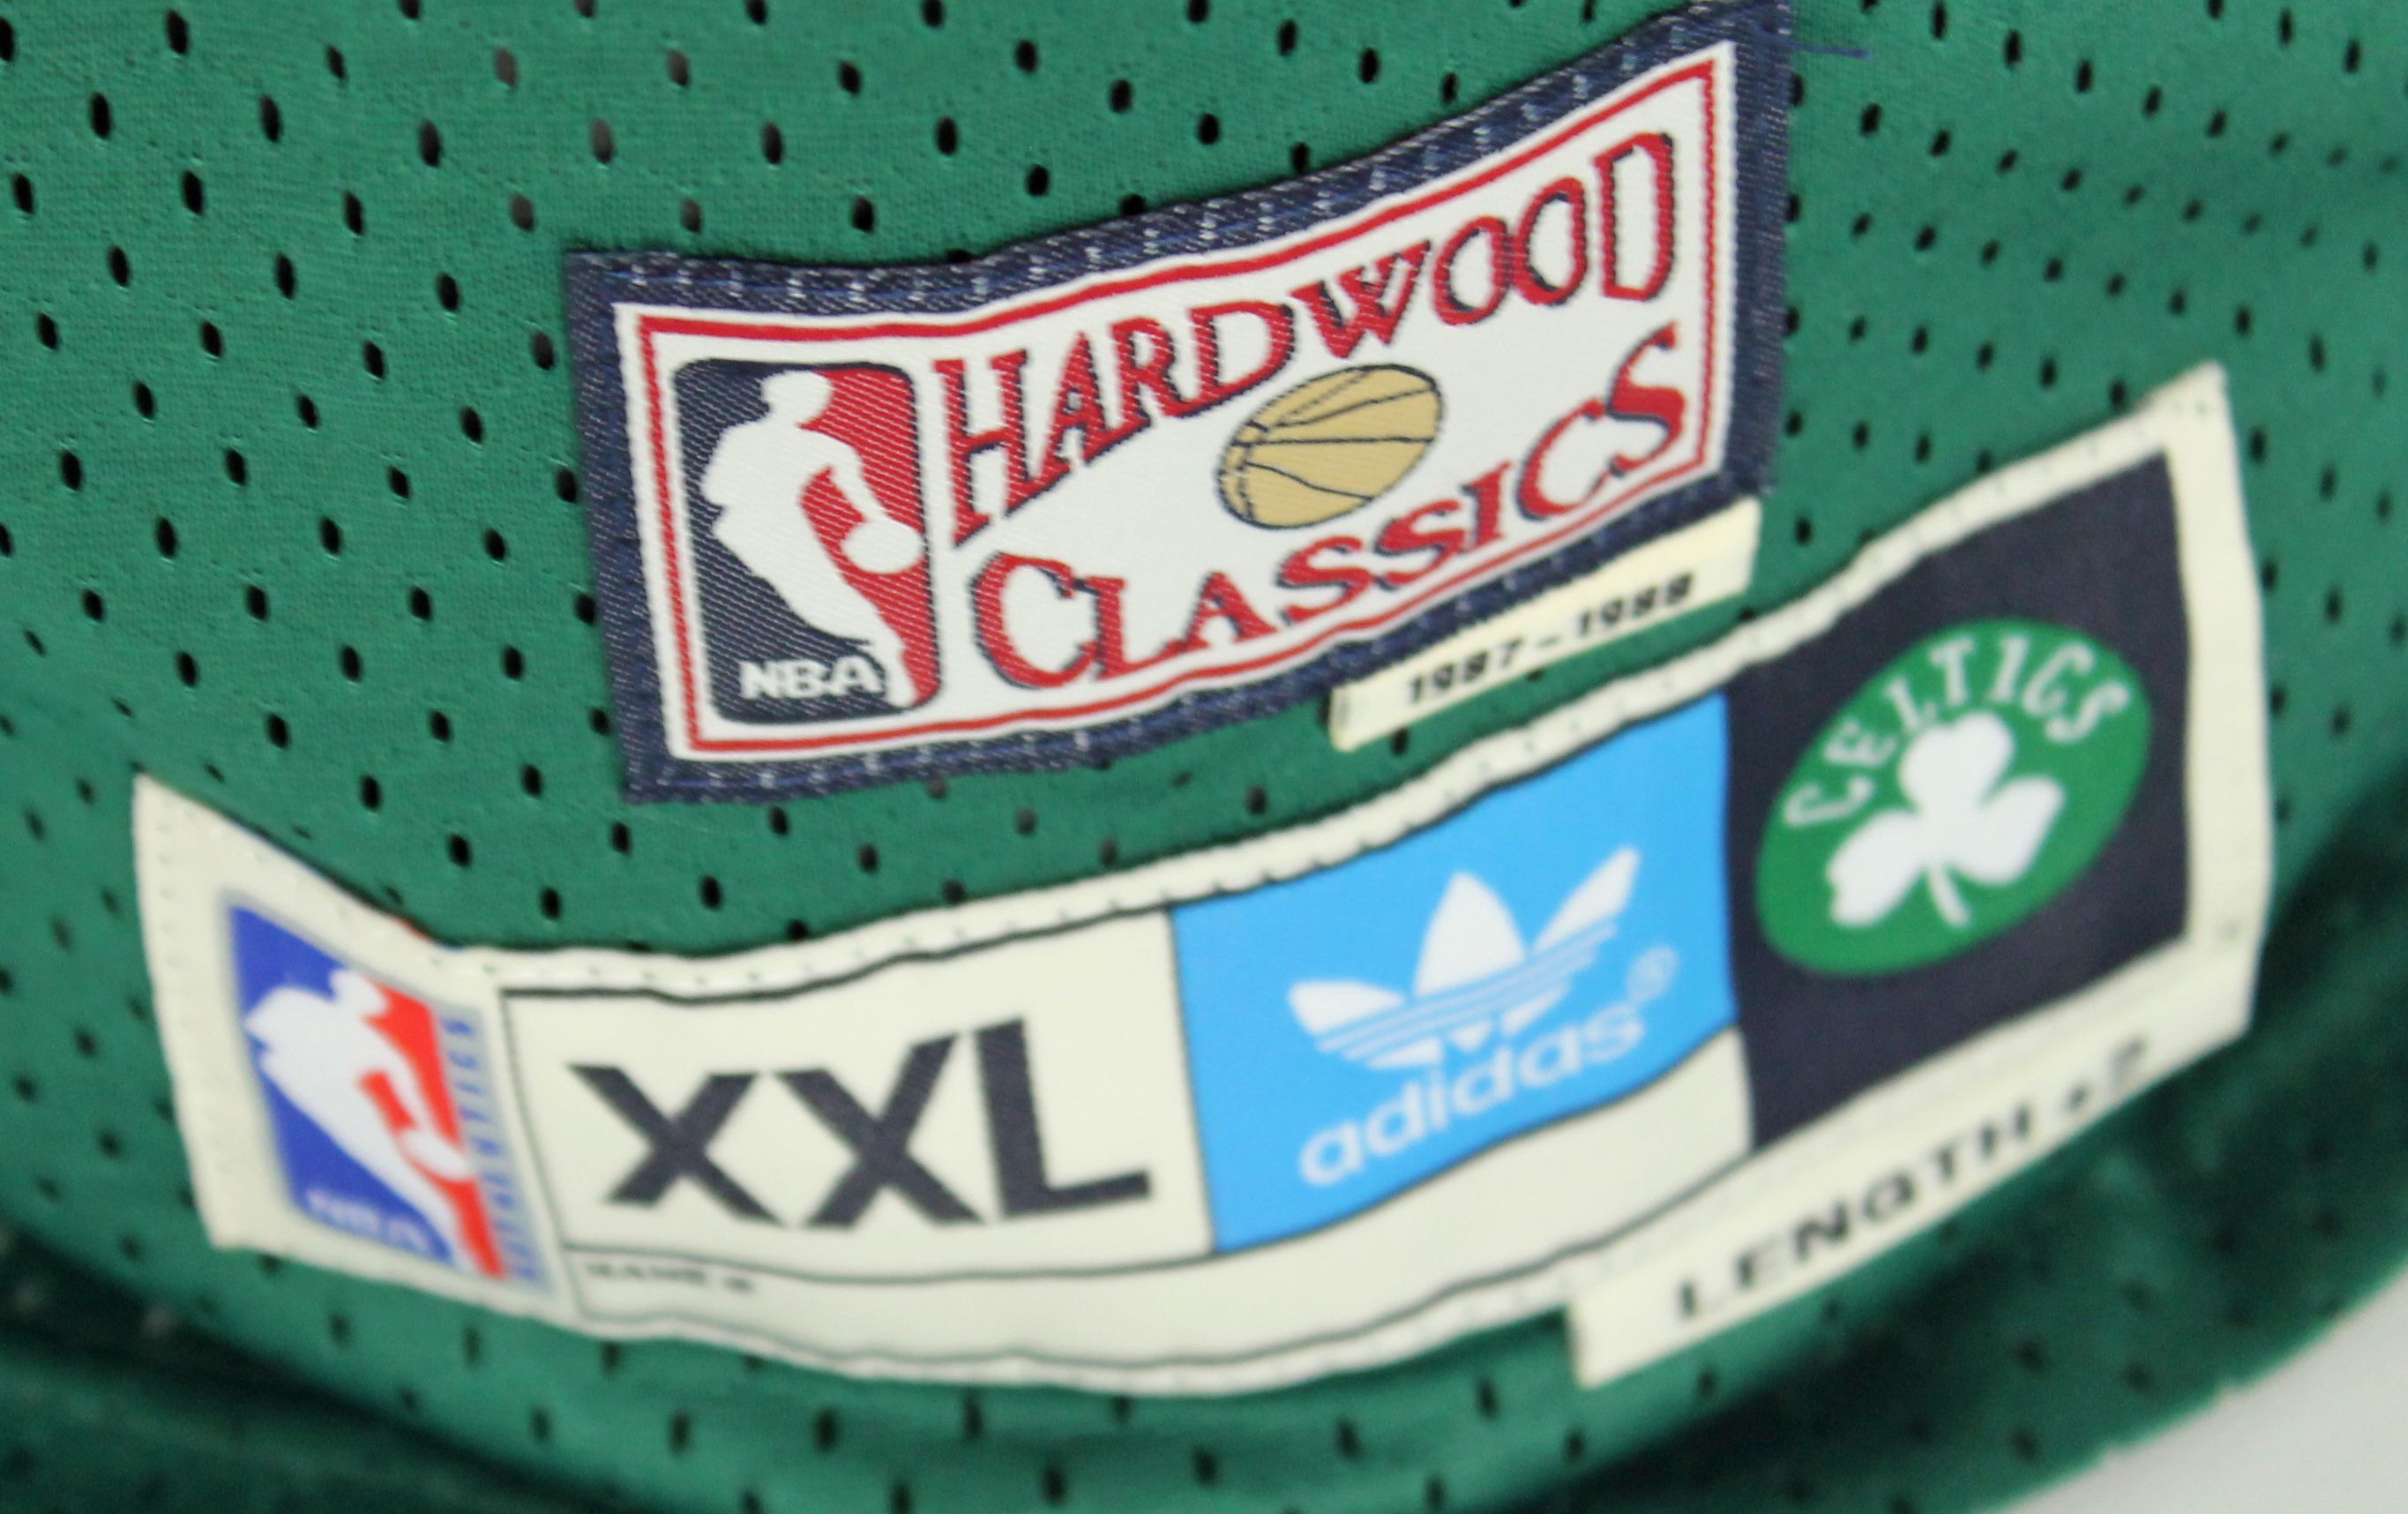 hardwood classics larry bird jersey